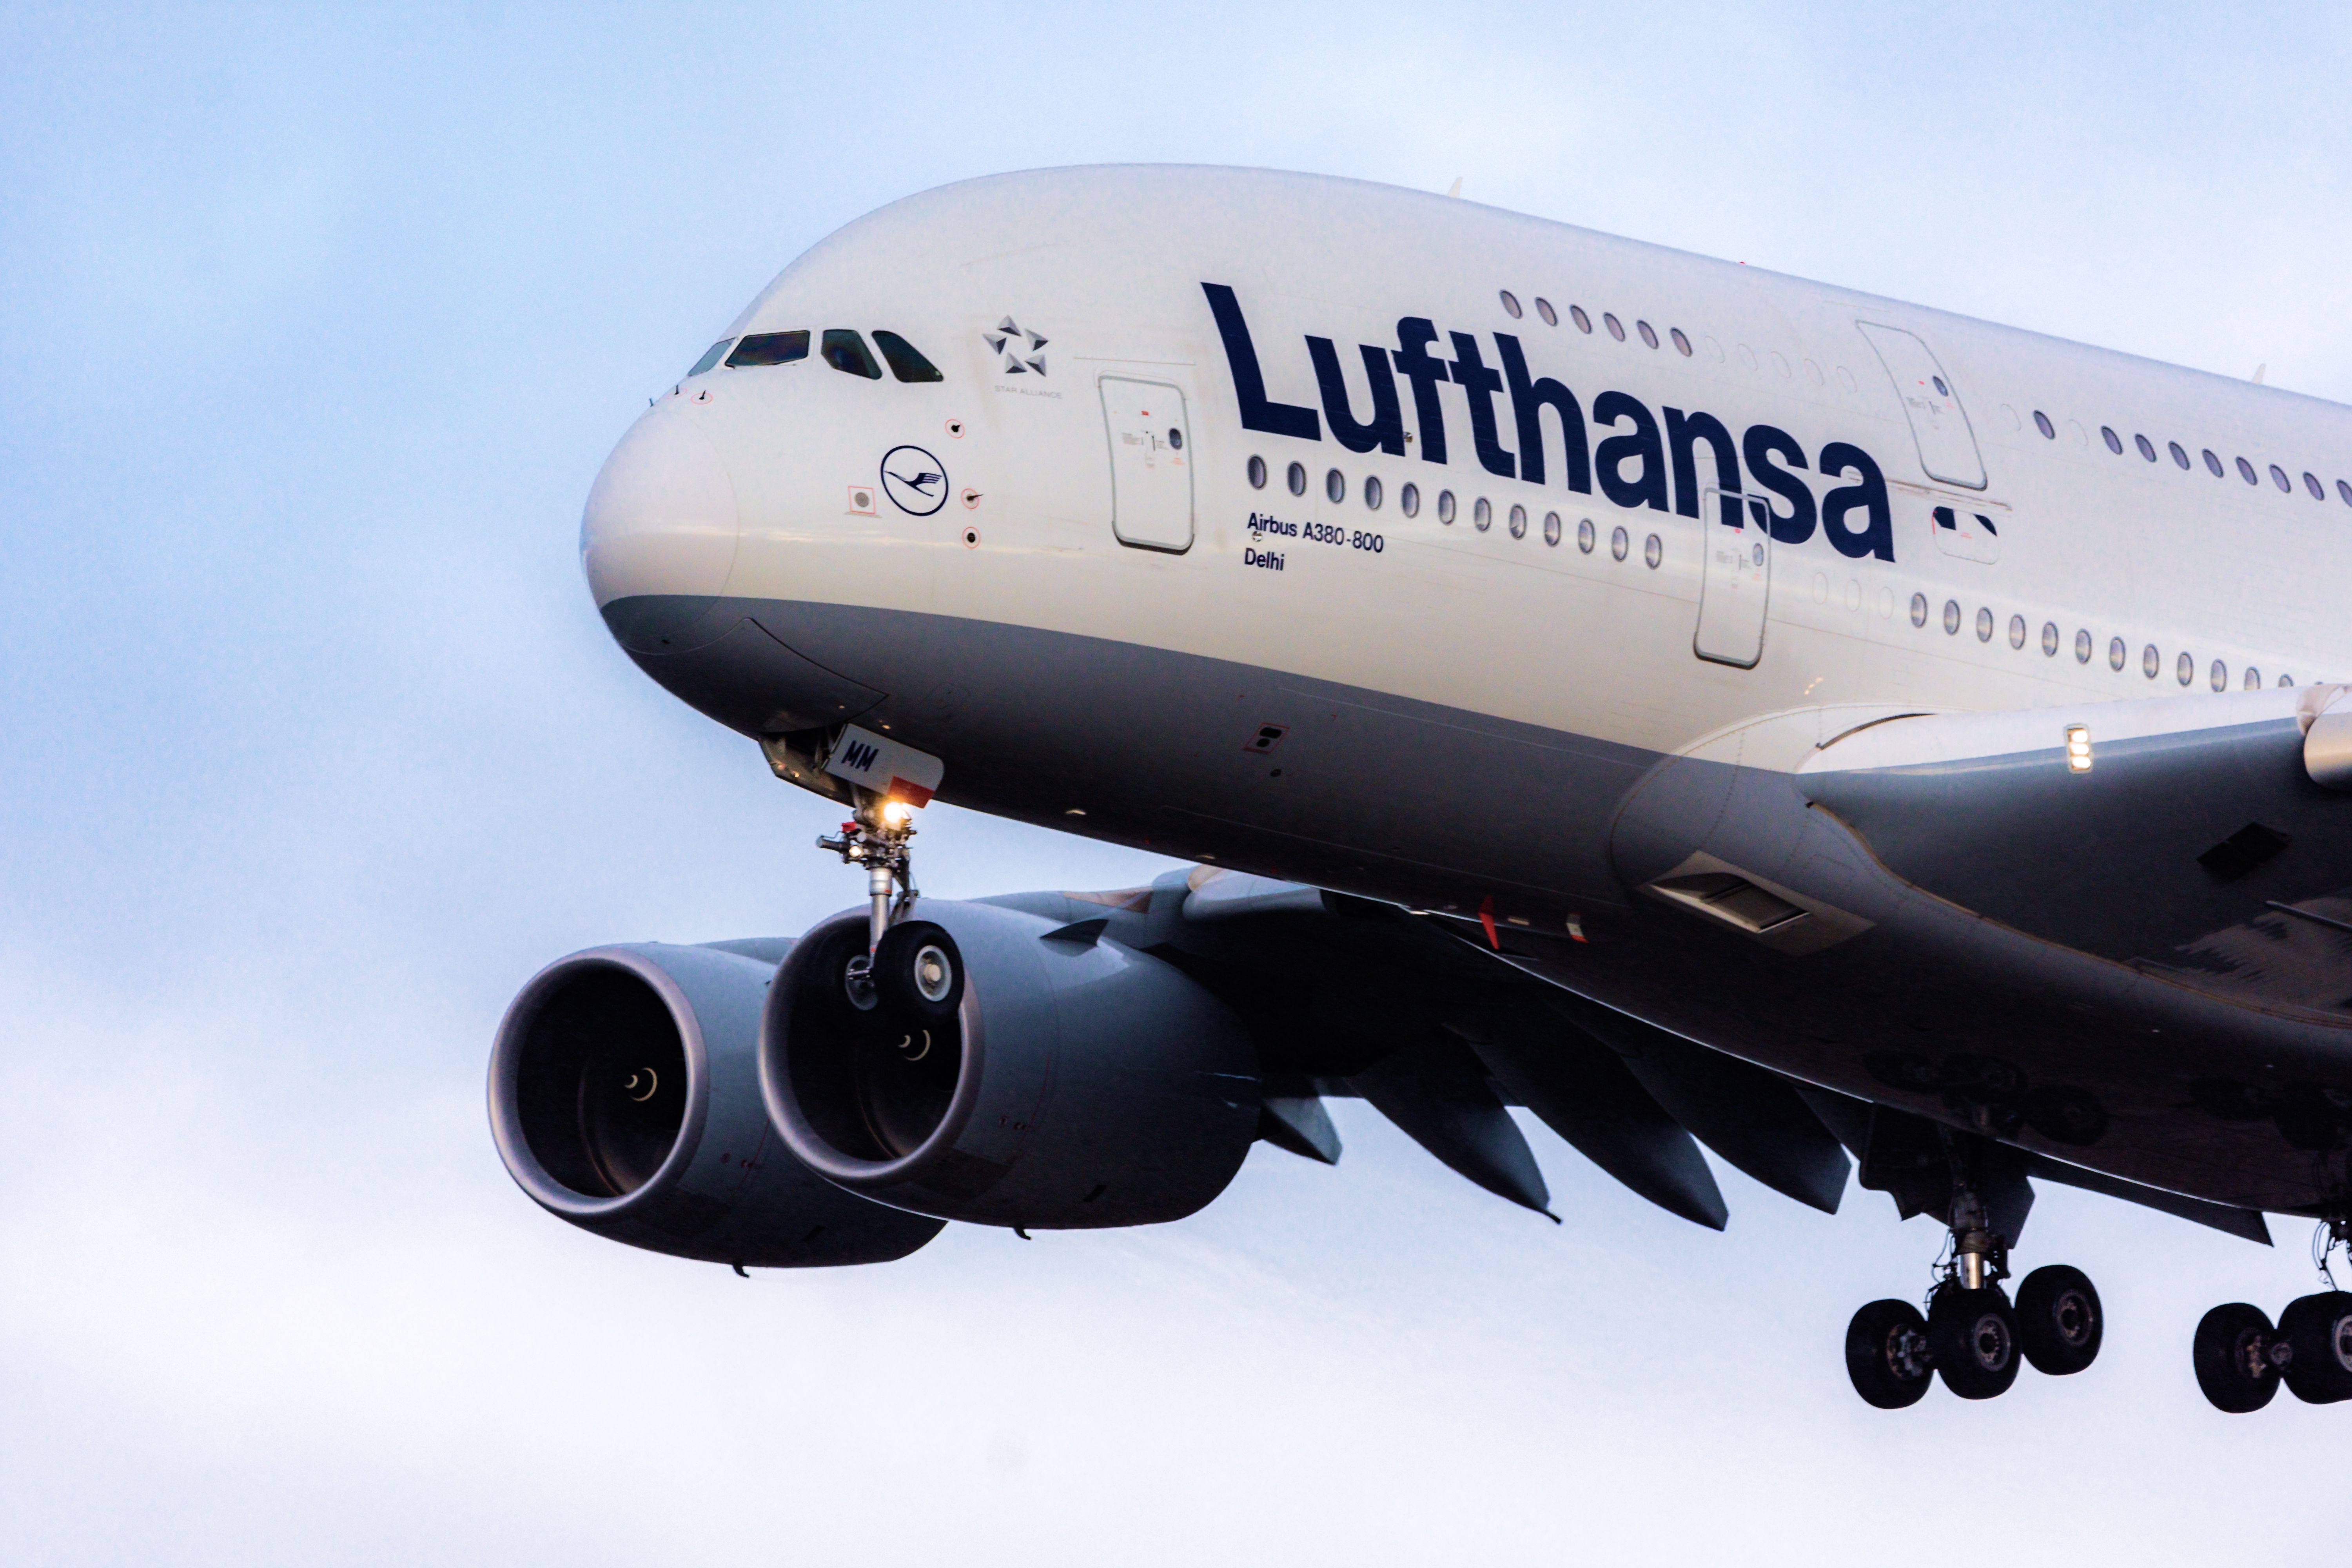 Lufthansa Airbus A380 landing